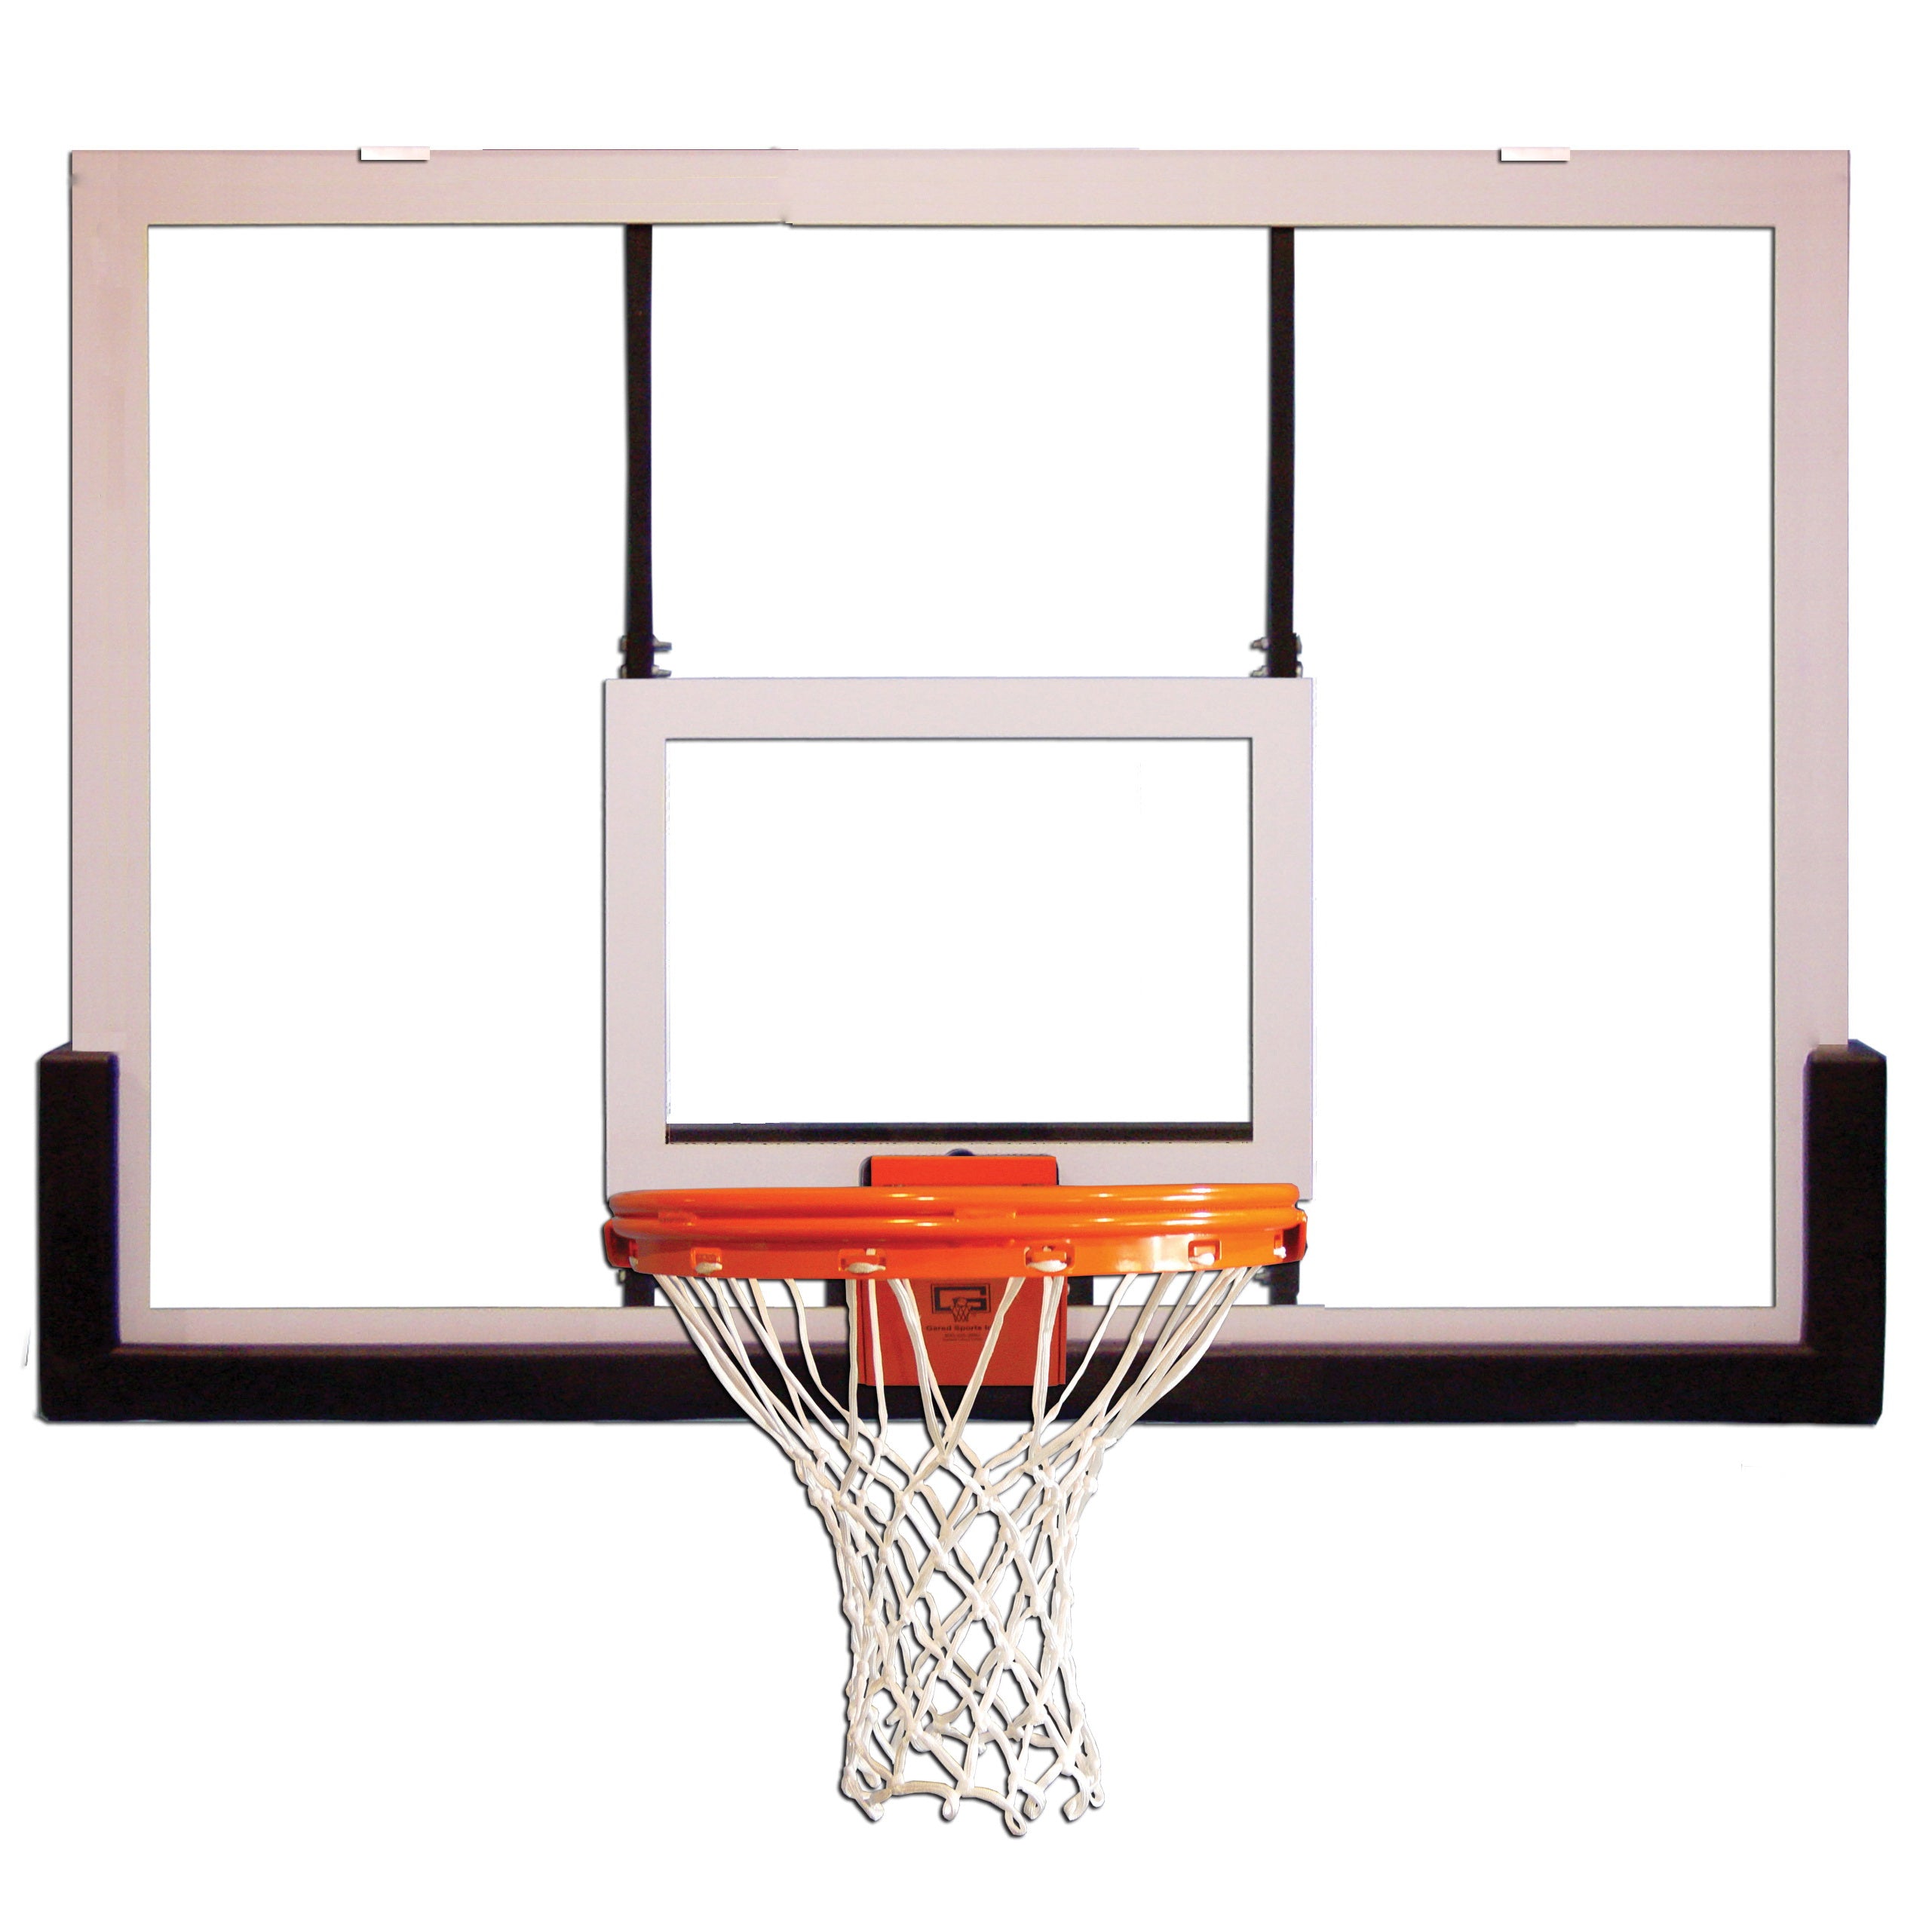 Gared Residential Acrylic Basketball Backboard